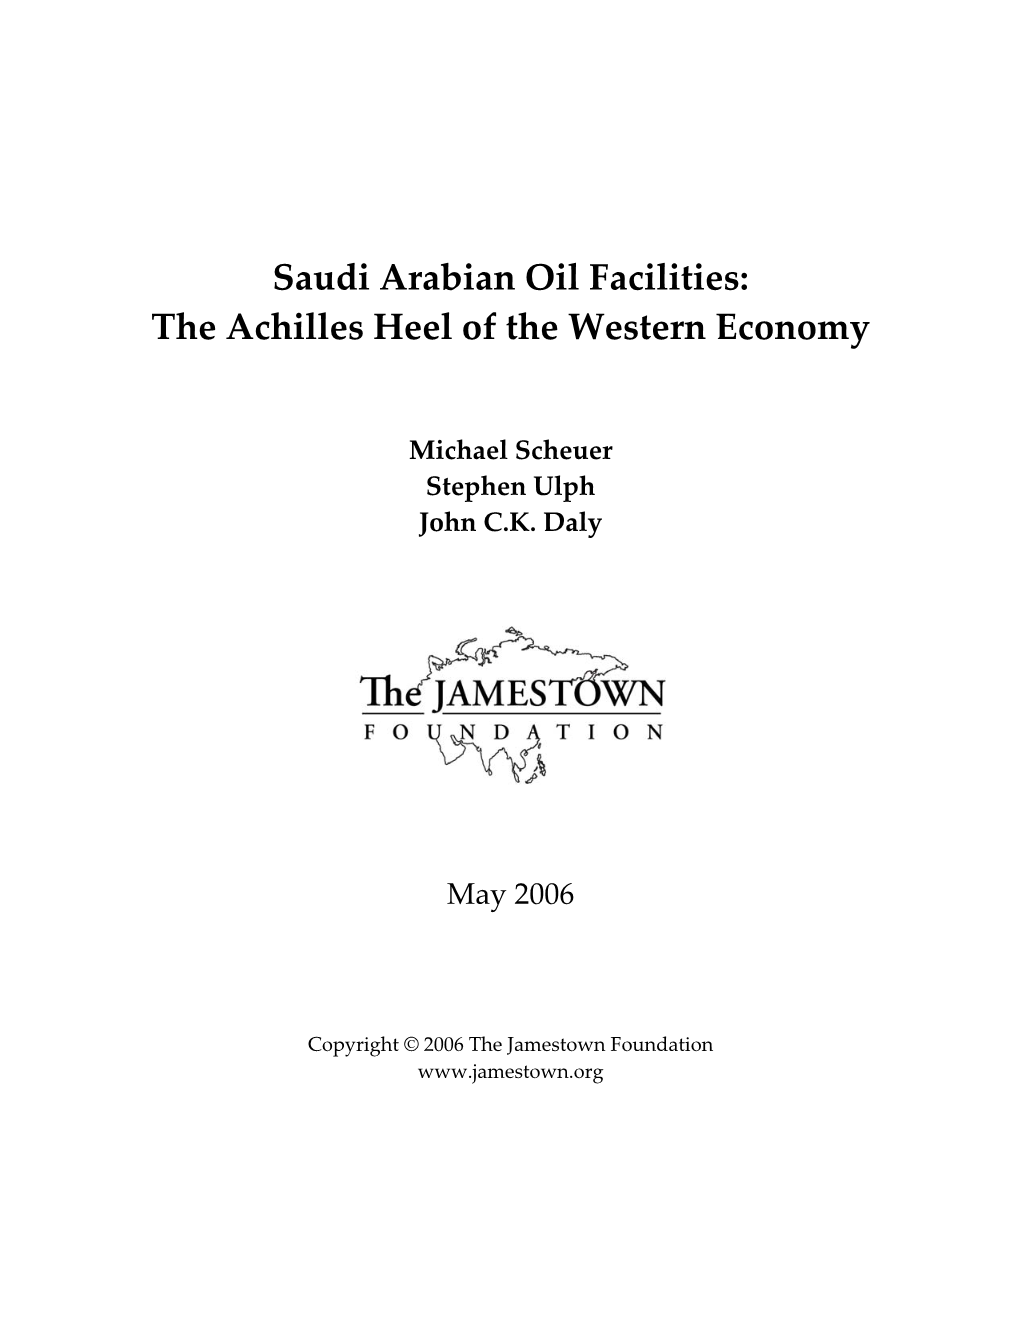 Saudi Arabian Oil Facilities: the Achilles Heel of the Western Economy